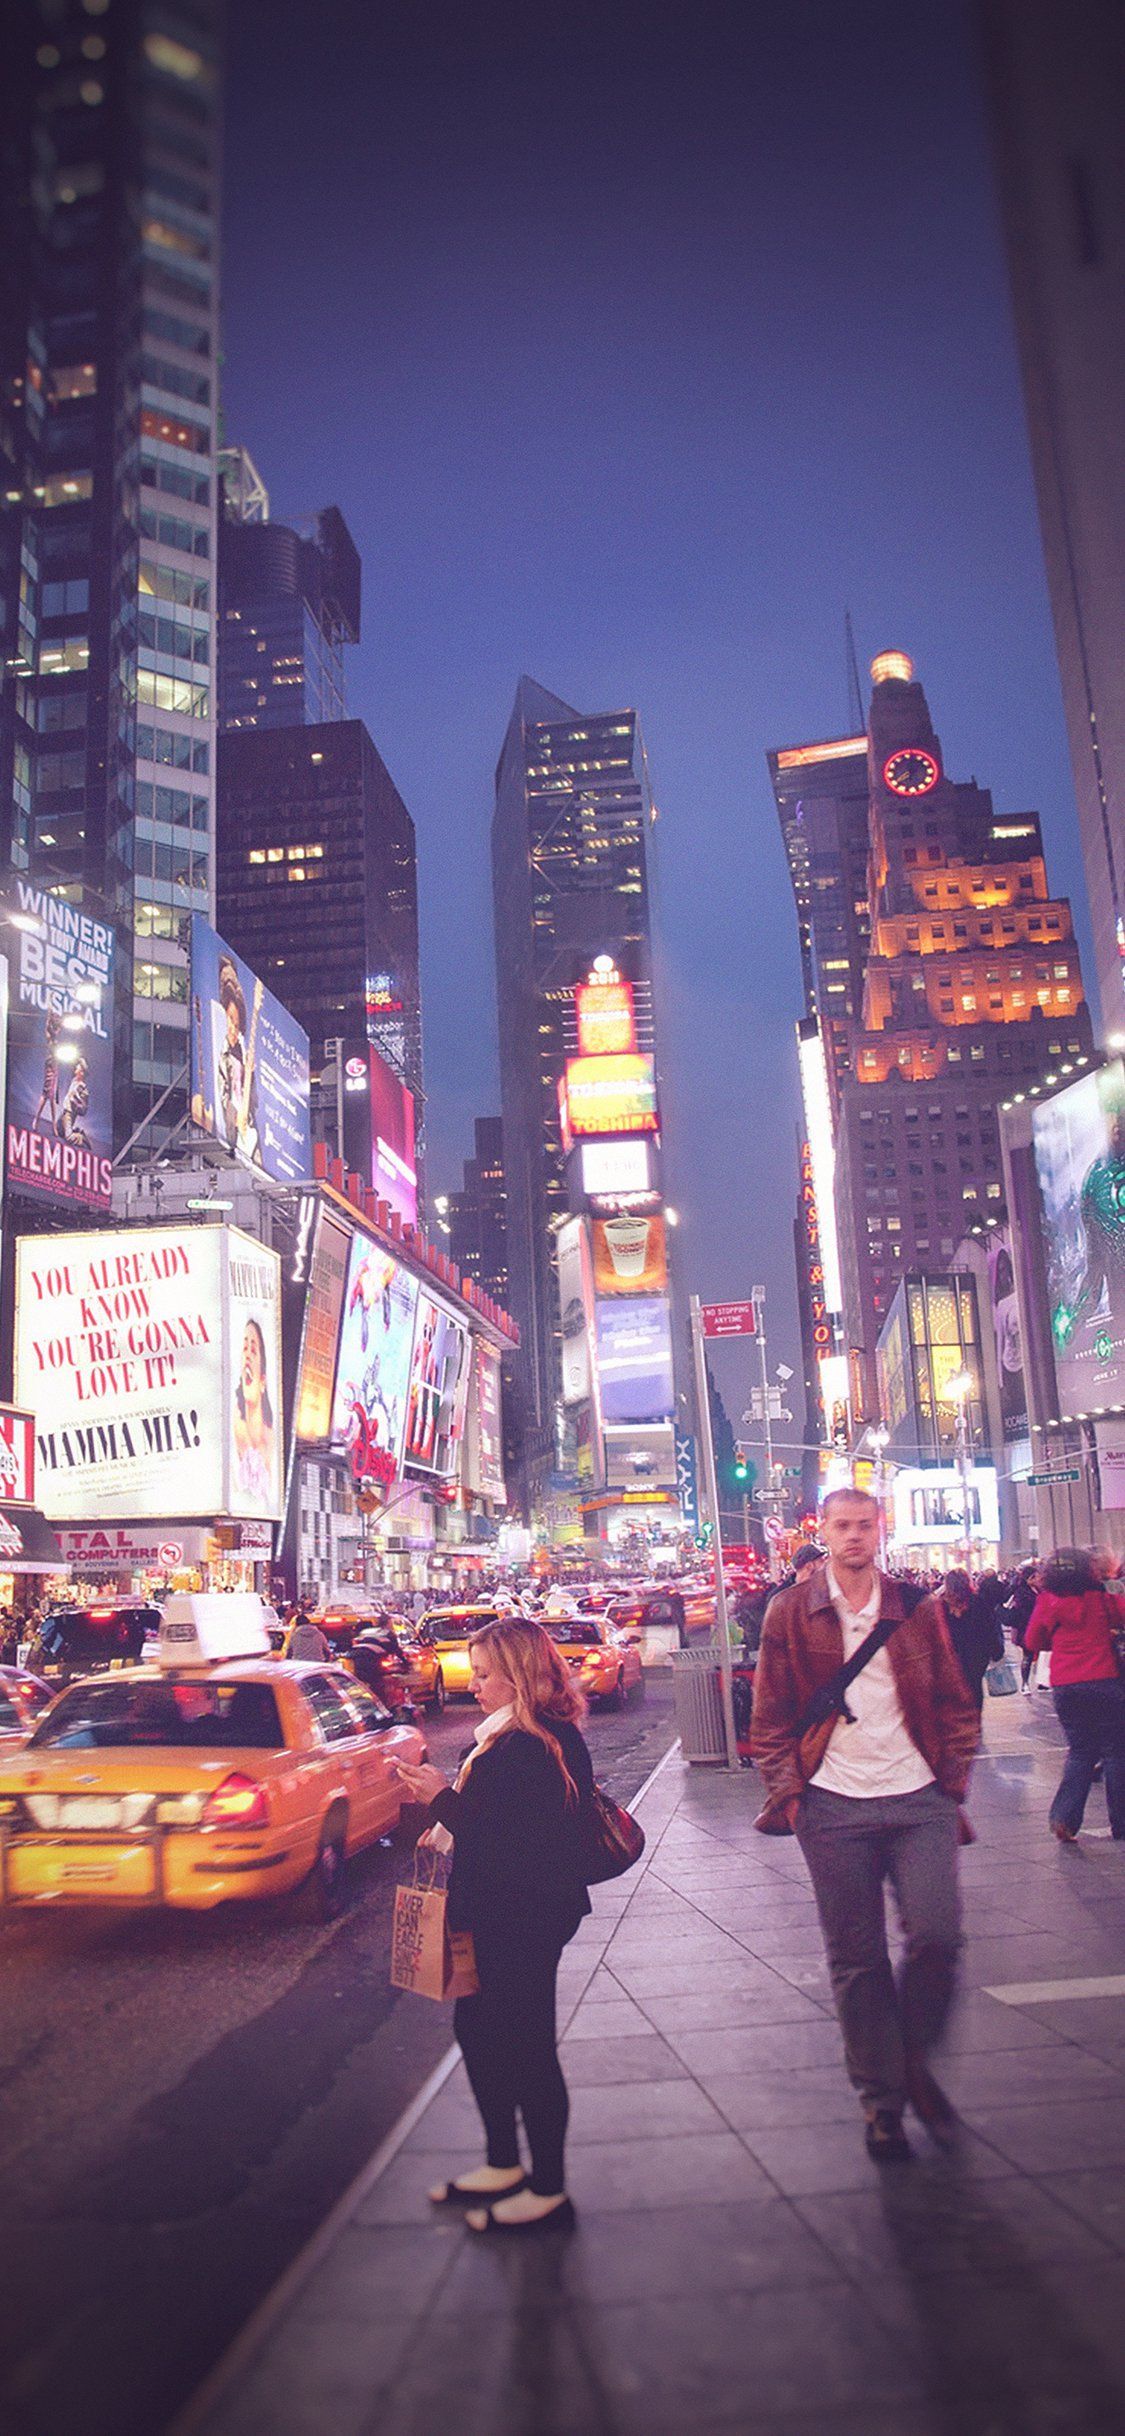  New York Hintergrundbild 1125x2436. New York street night city vignette iPhone X Wallpaper Free Download